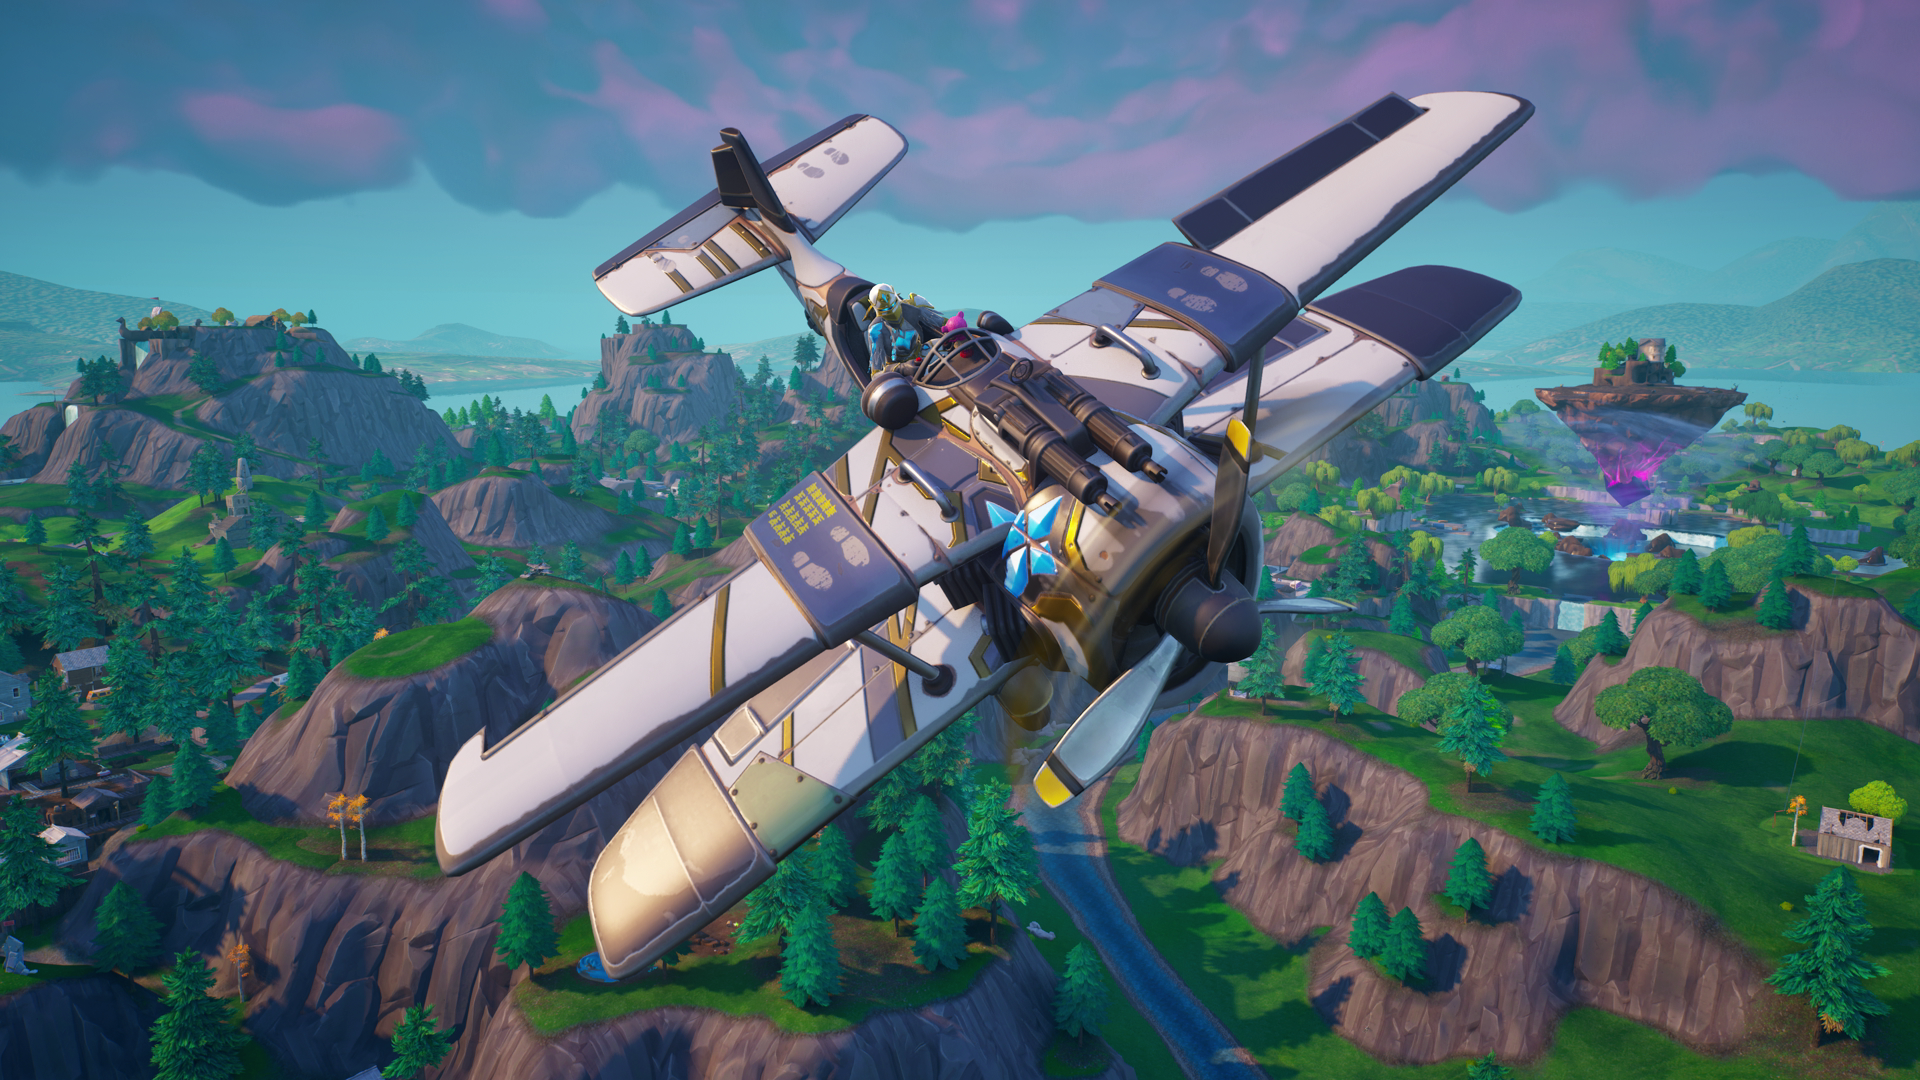 Fortnite OG player in a plane flying over the island